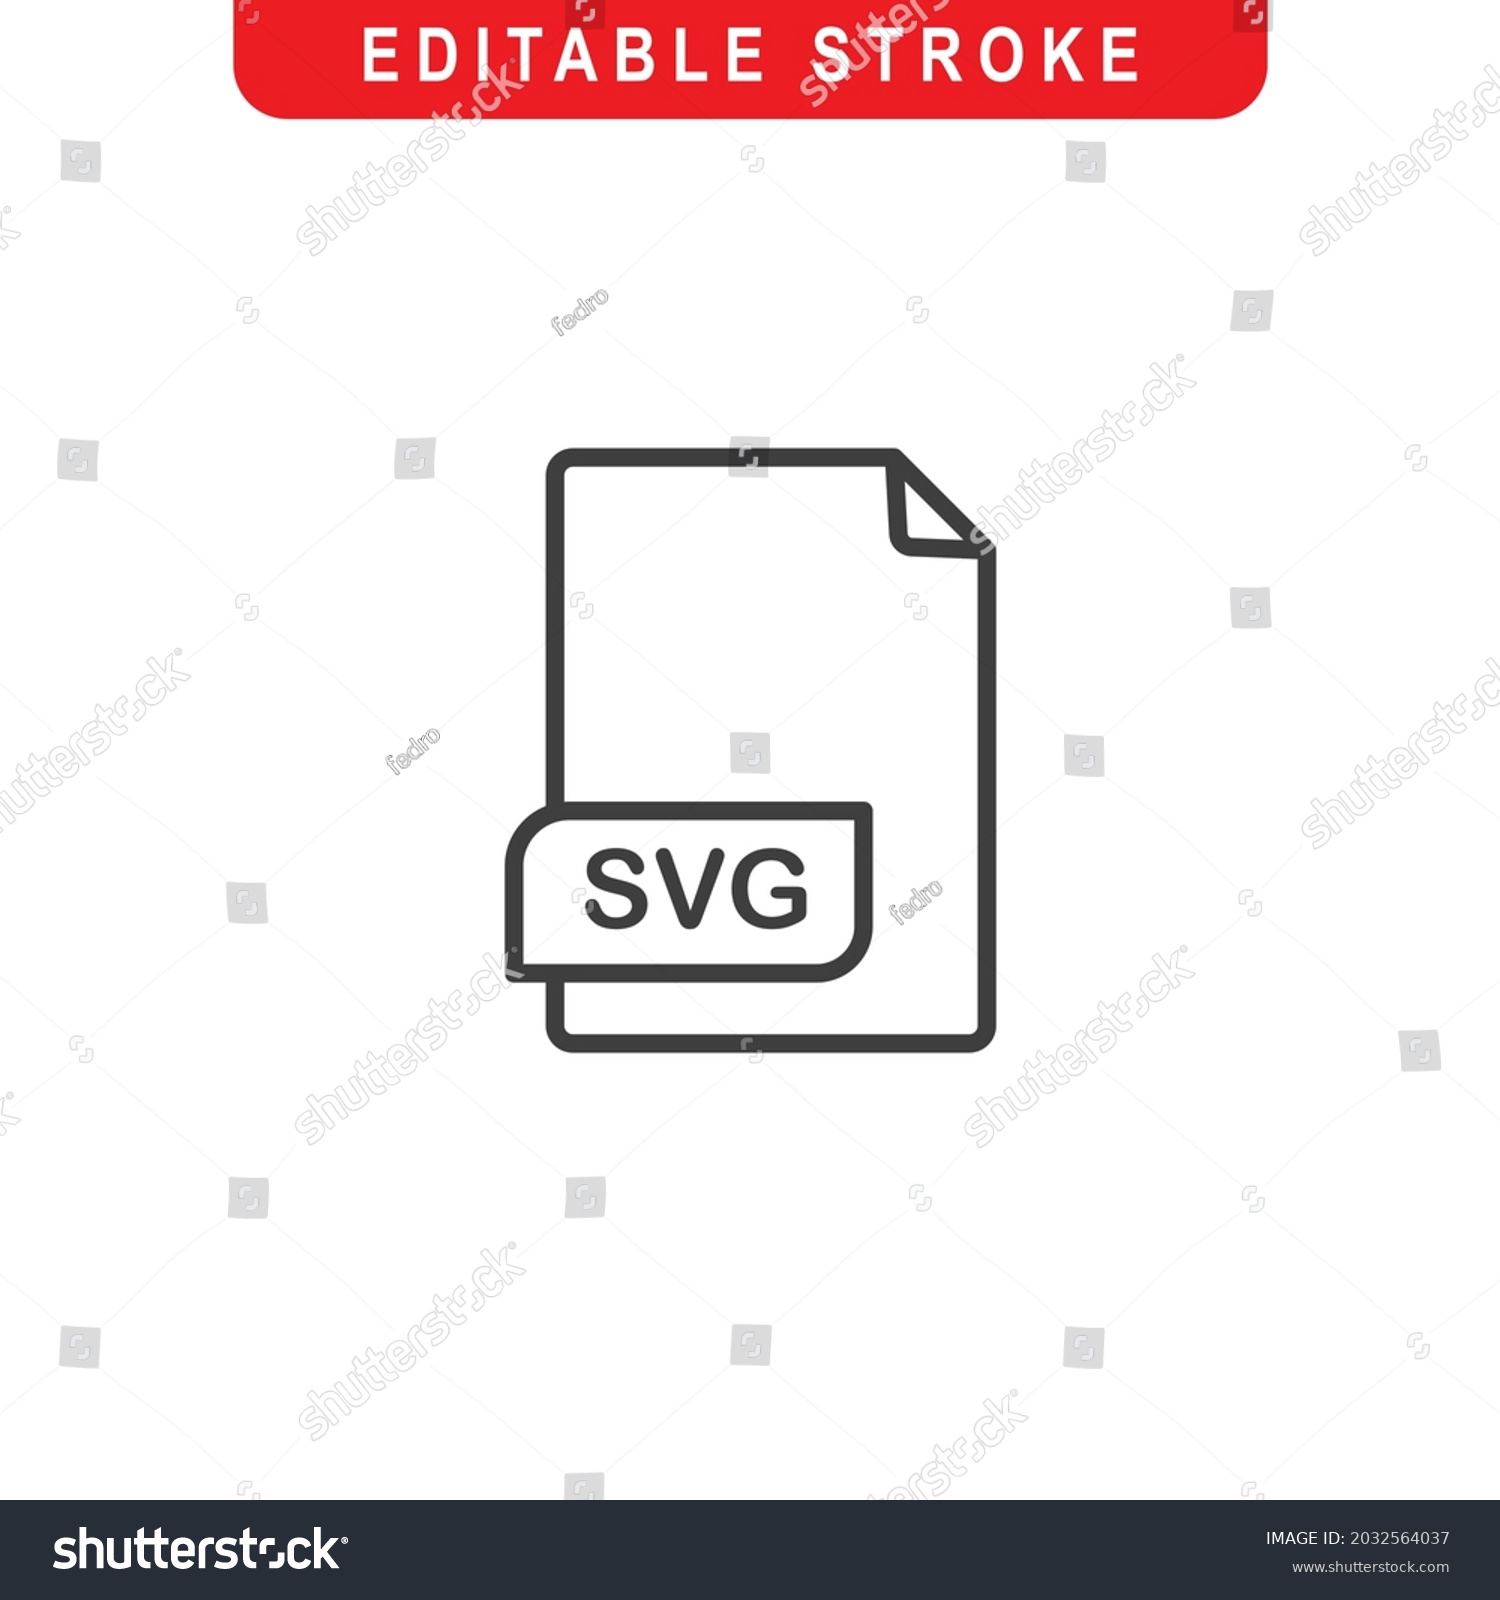 SVG of SVG File Outline Icon. SVG Document Line Art Logo. Vector Illustration. Isolated on White Background. Editable Stroke svg